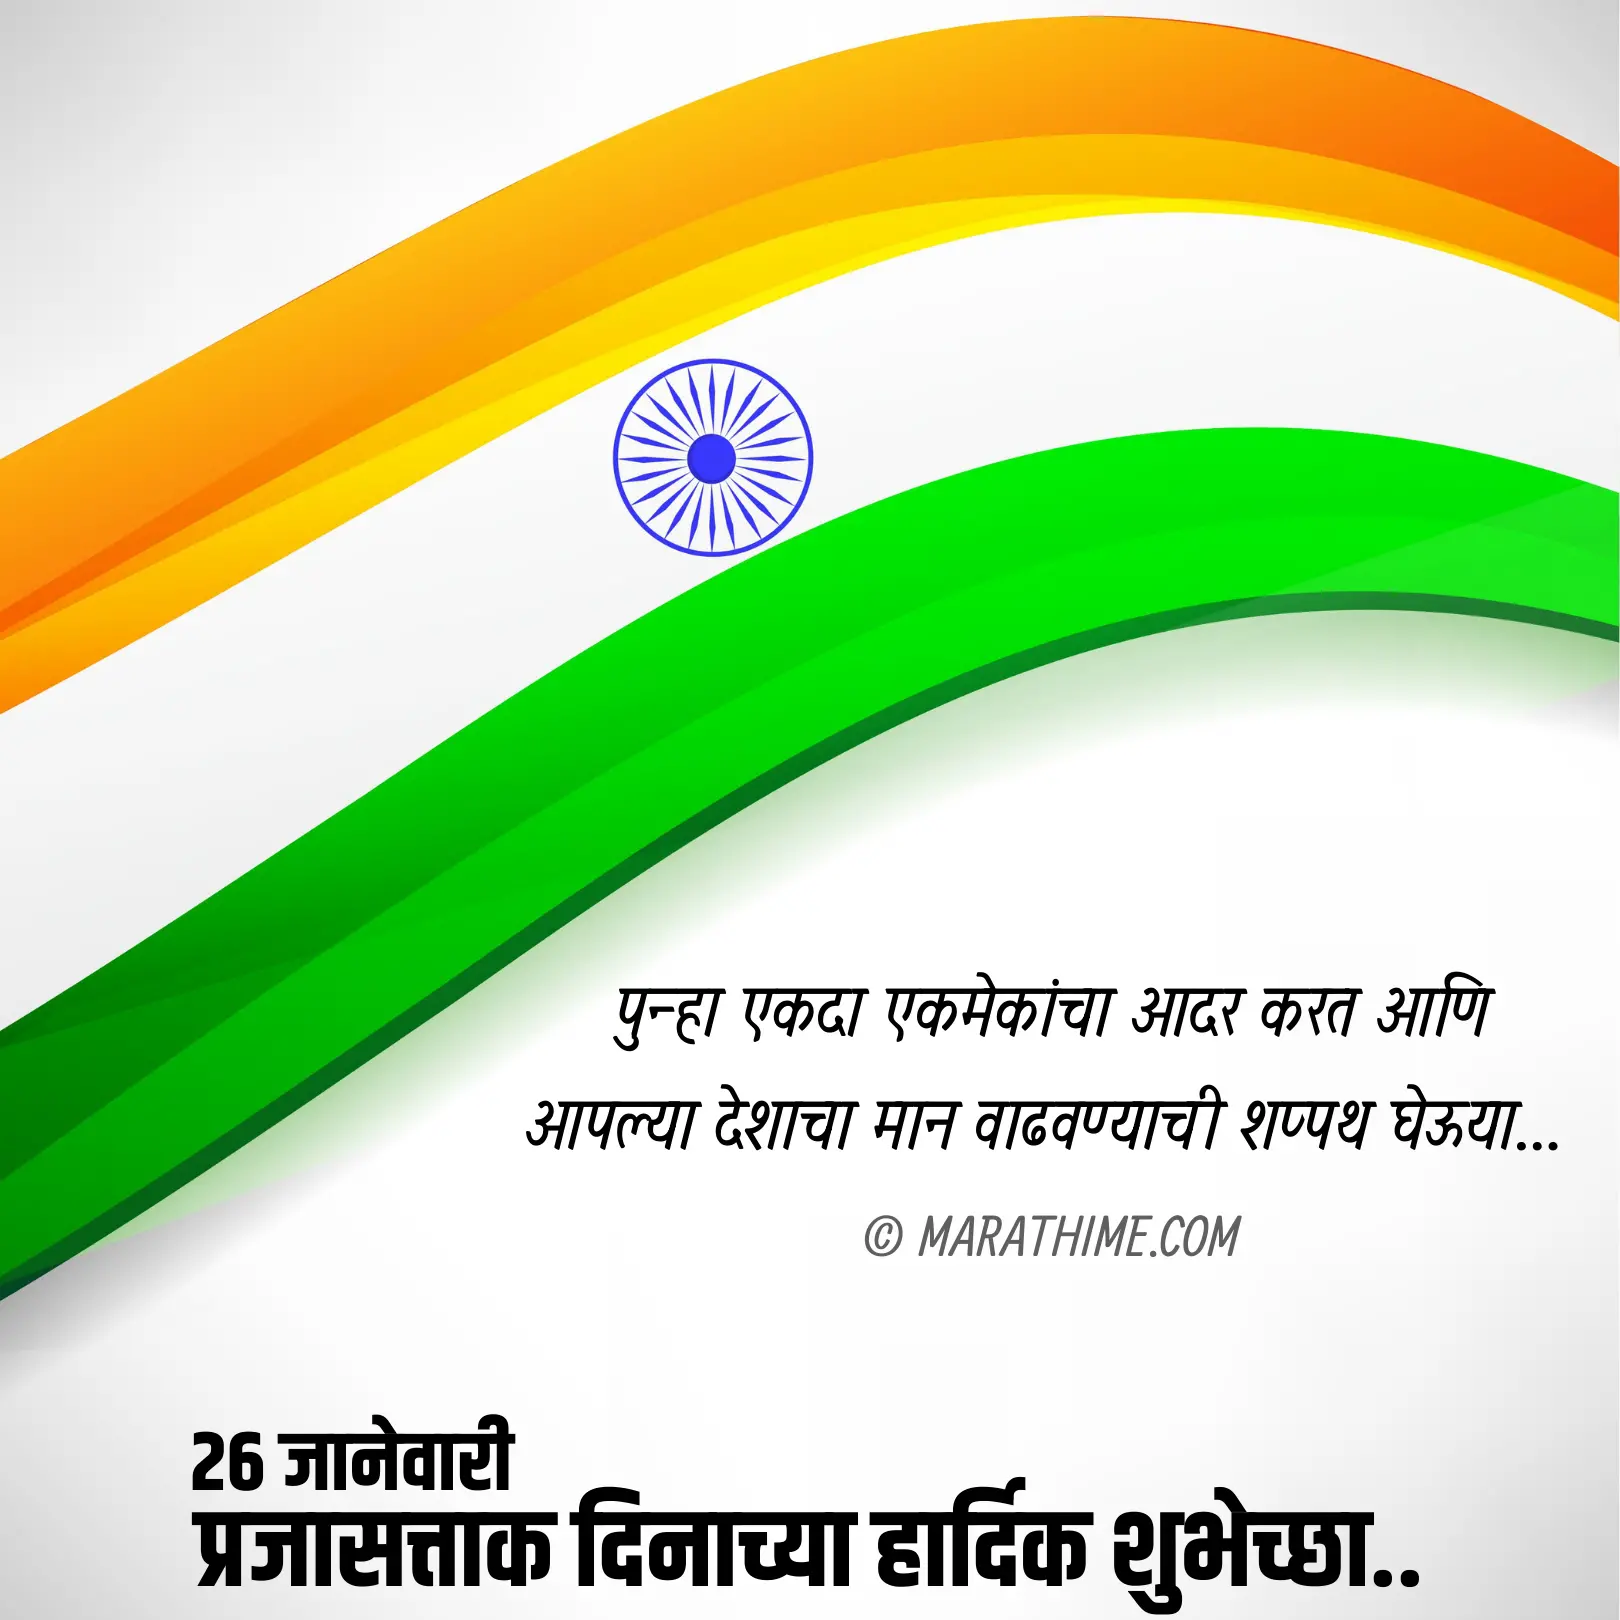 प्रजासत्ताक दिन शुभेच्छा-republic day quotes in marathi (13)